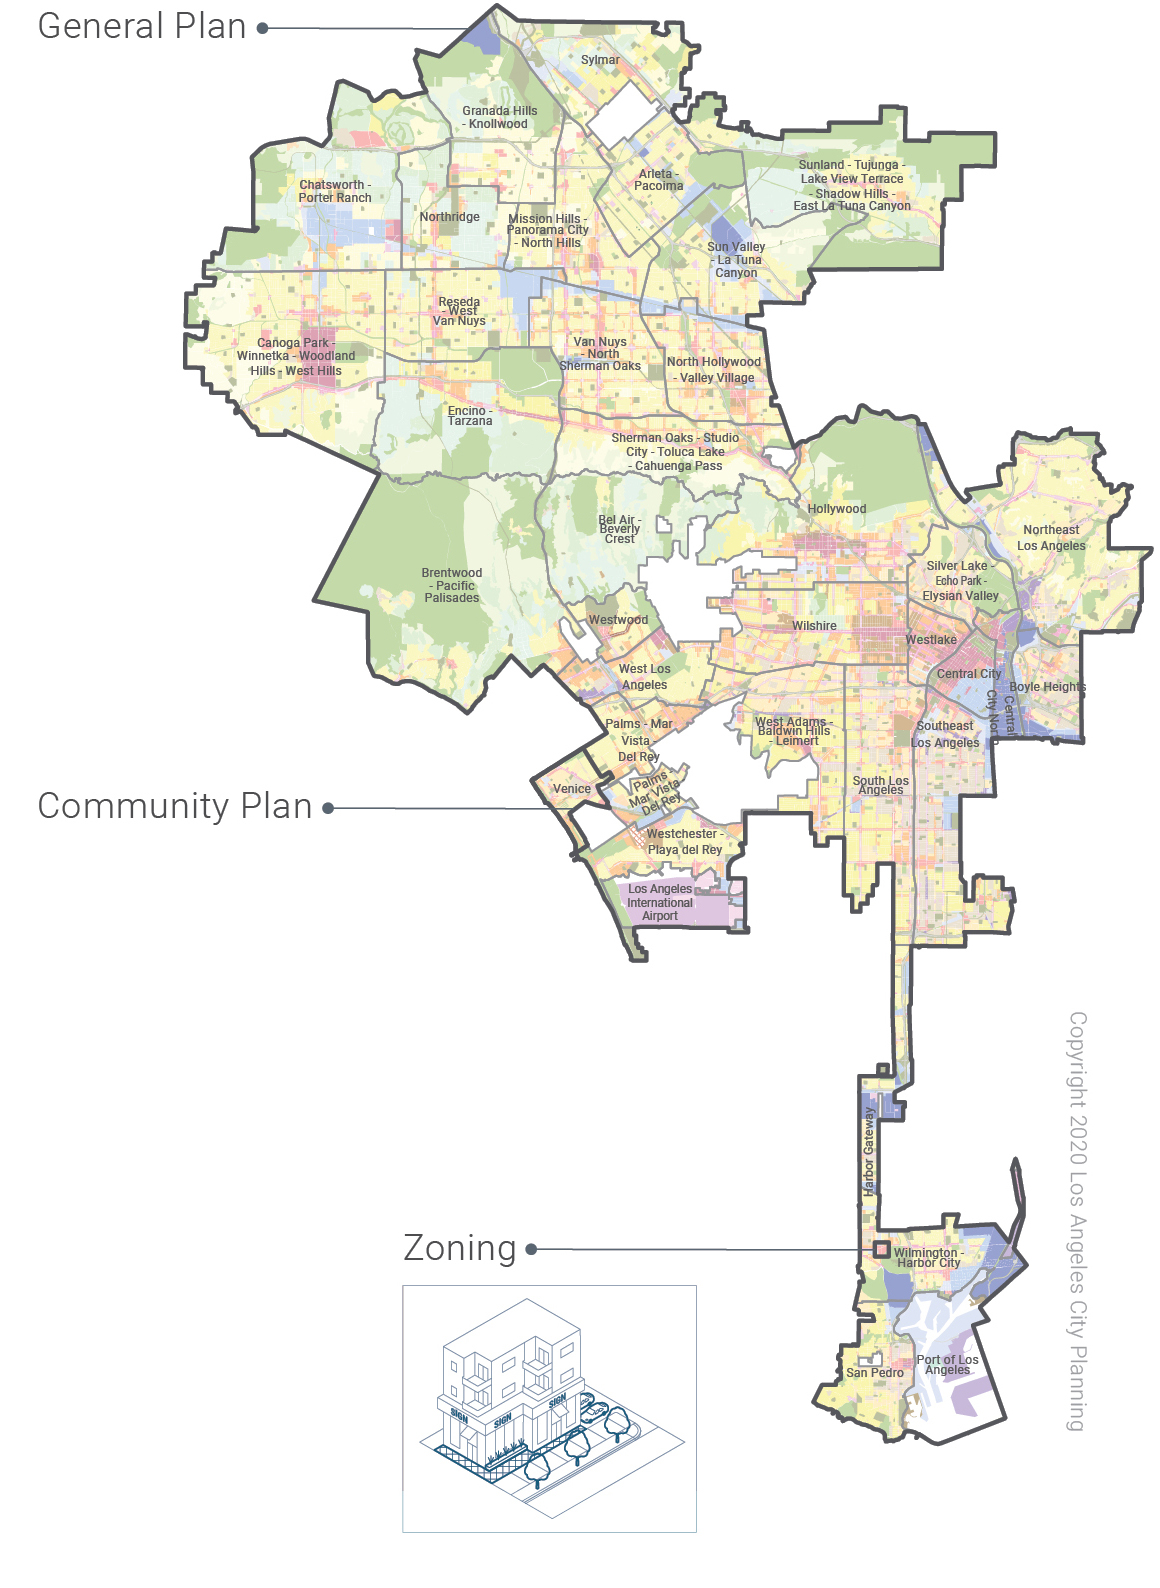 Image of Zones in Los Angeles